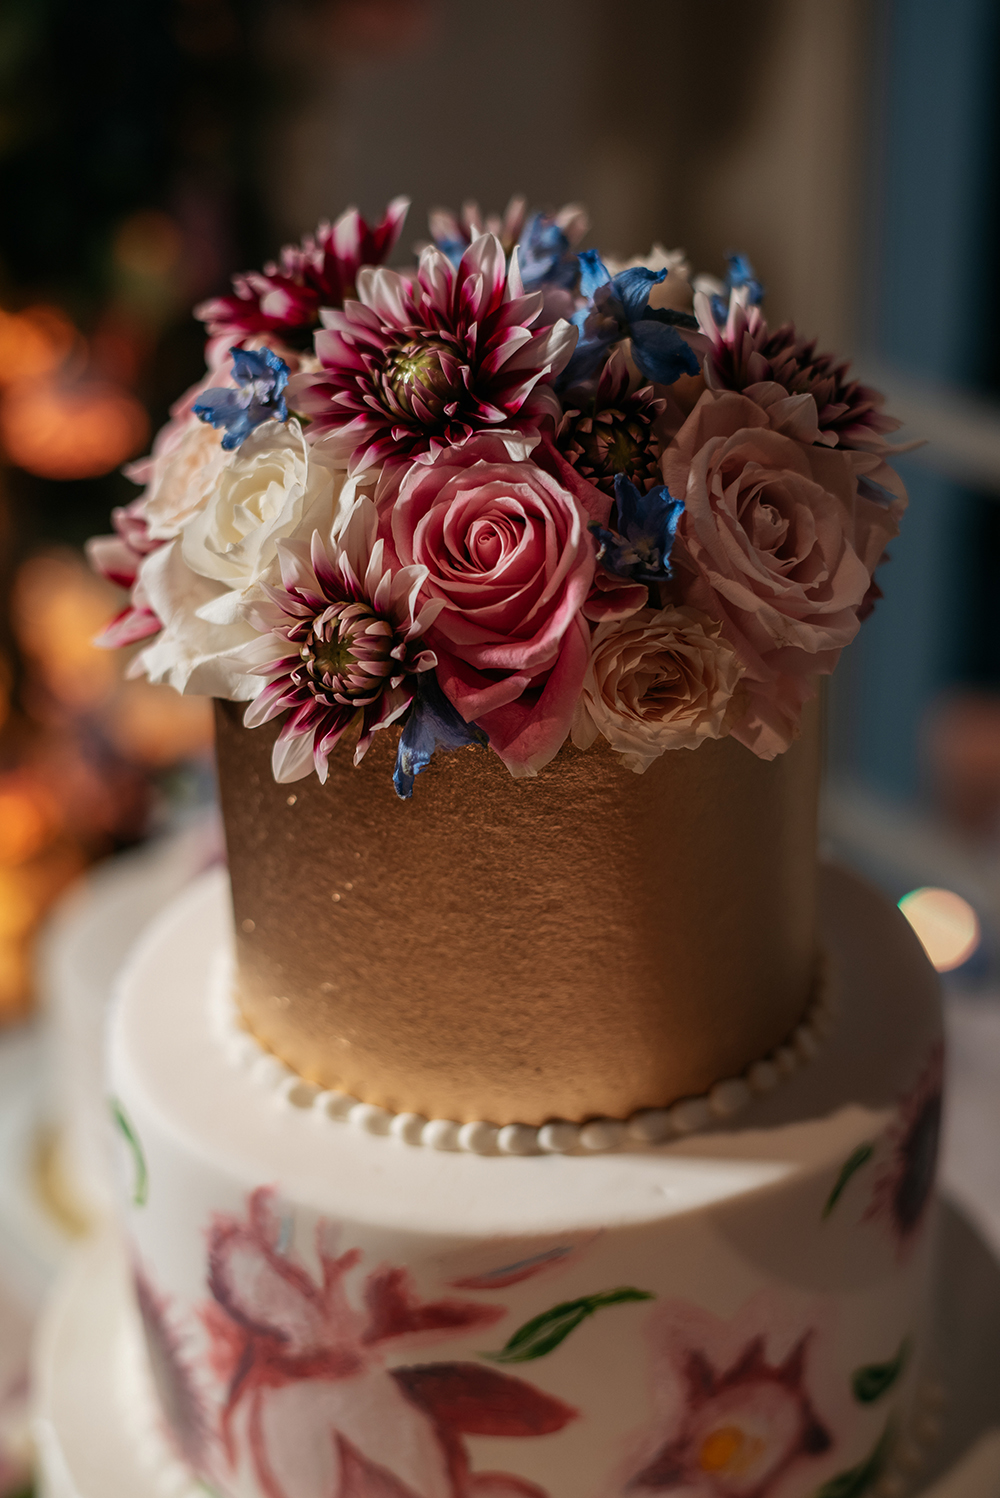 floral wedding cake topper